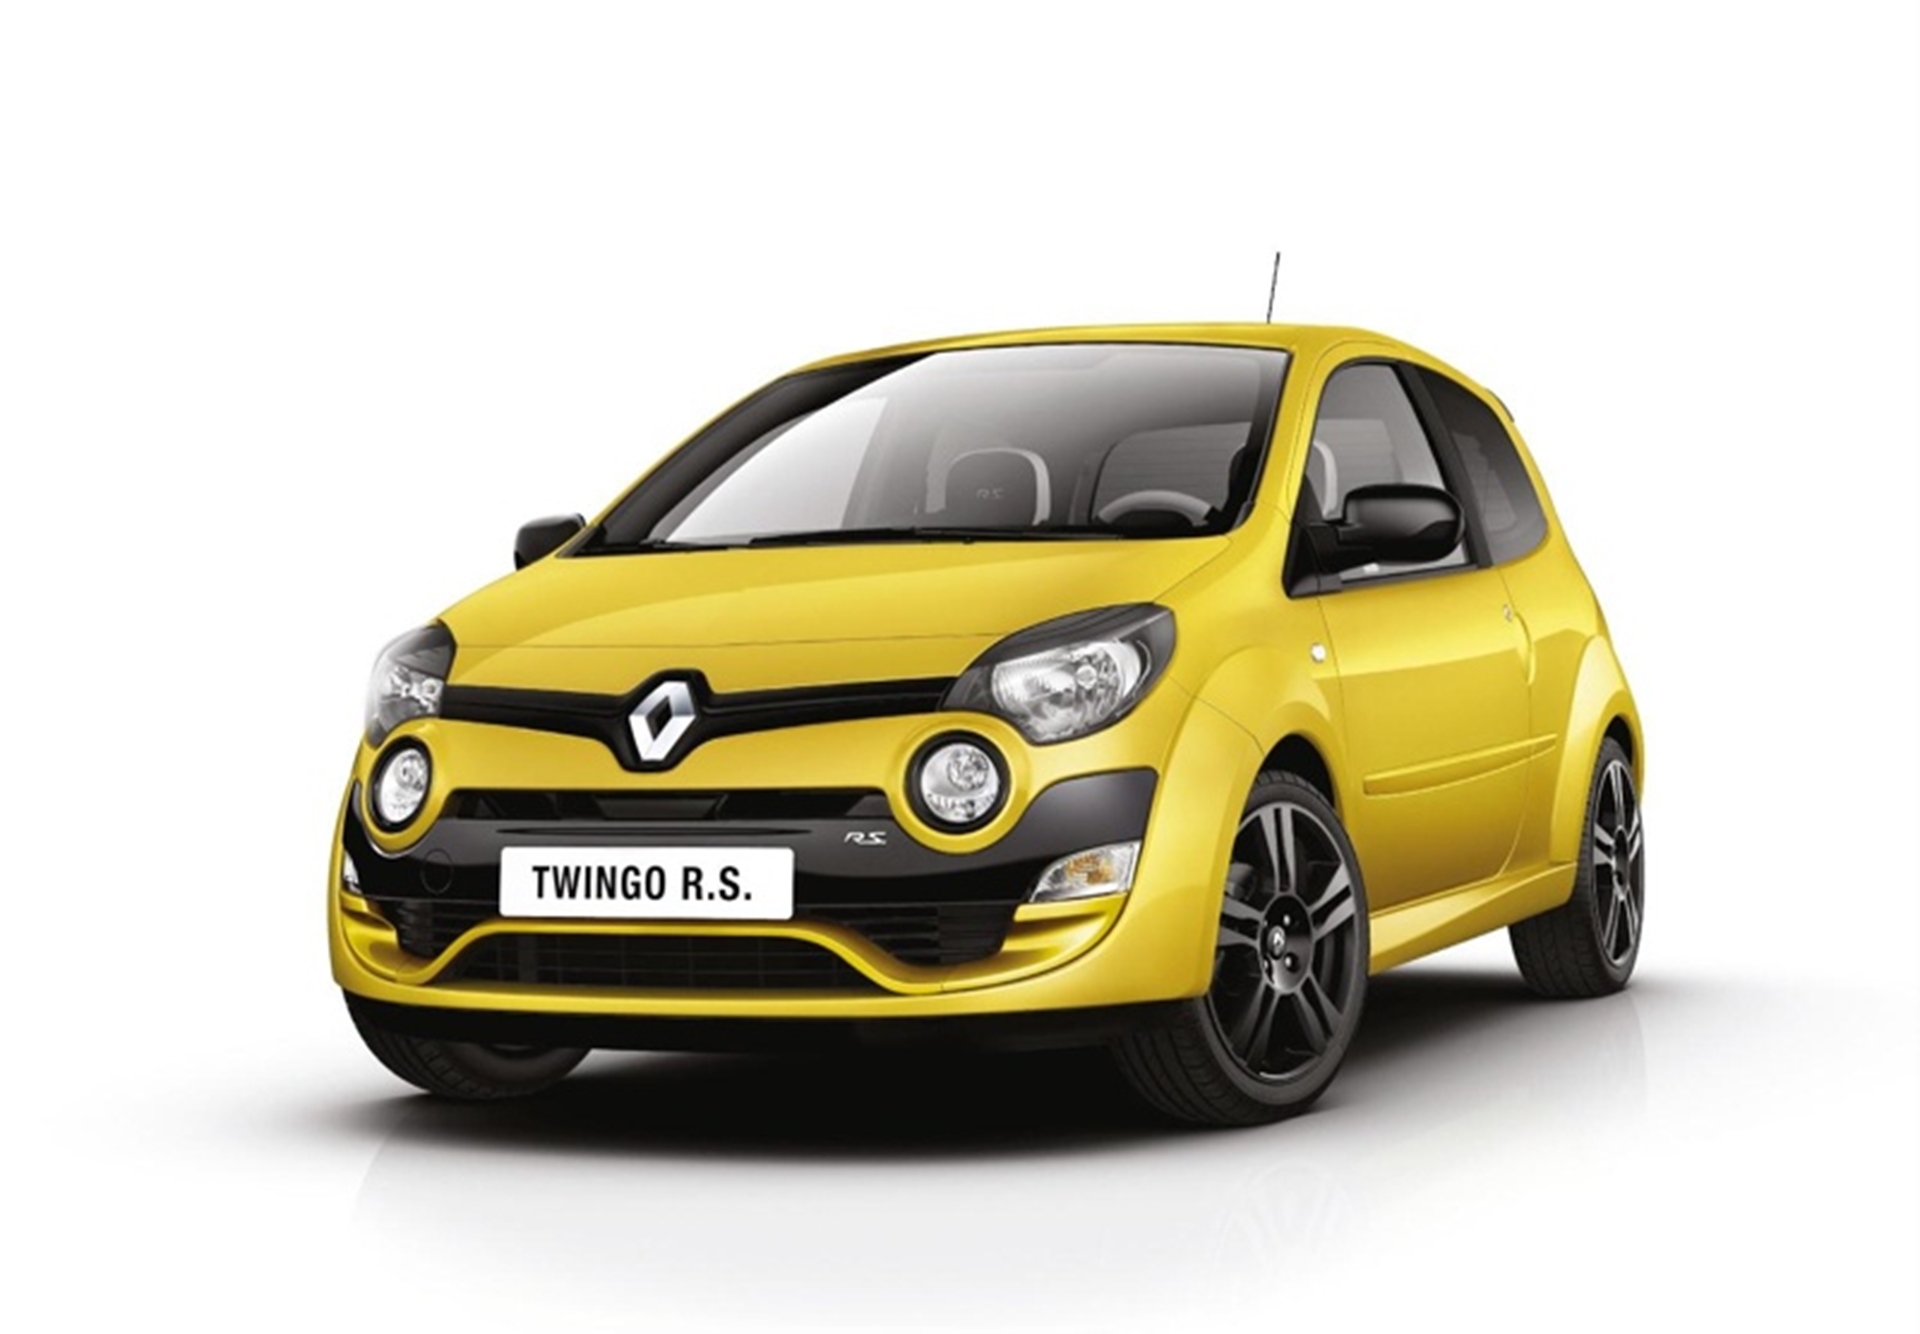 New Twingo Renaultsport 133 Bursts Onto the Scene at £13,565